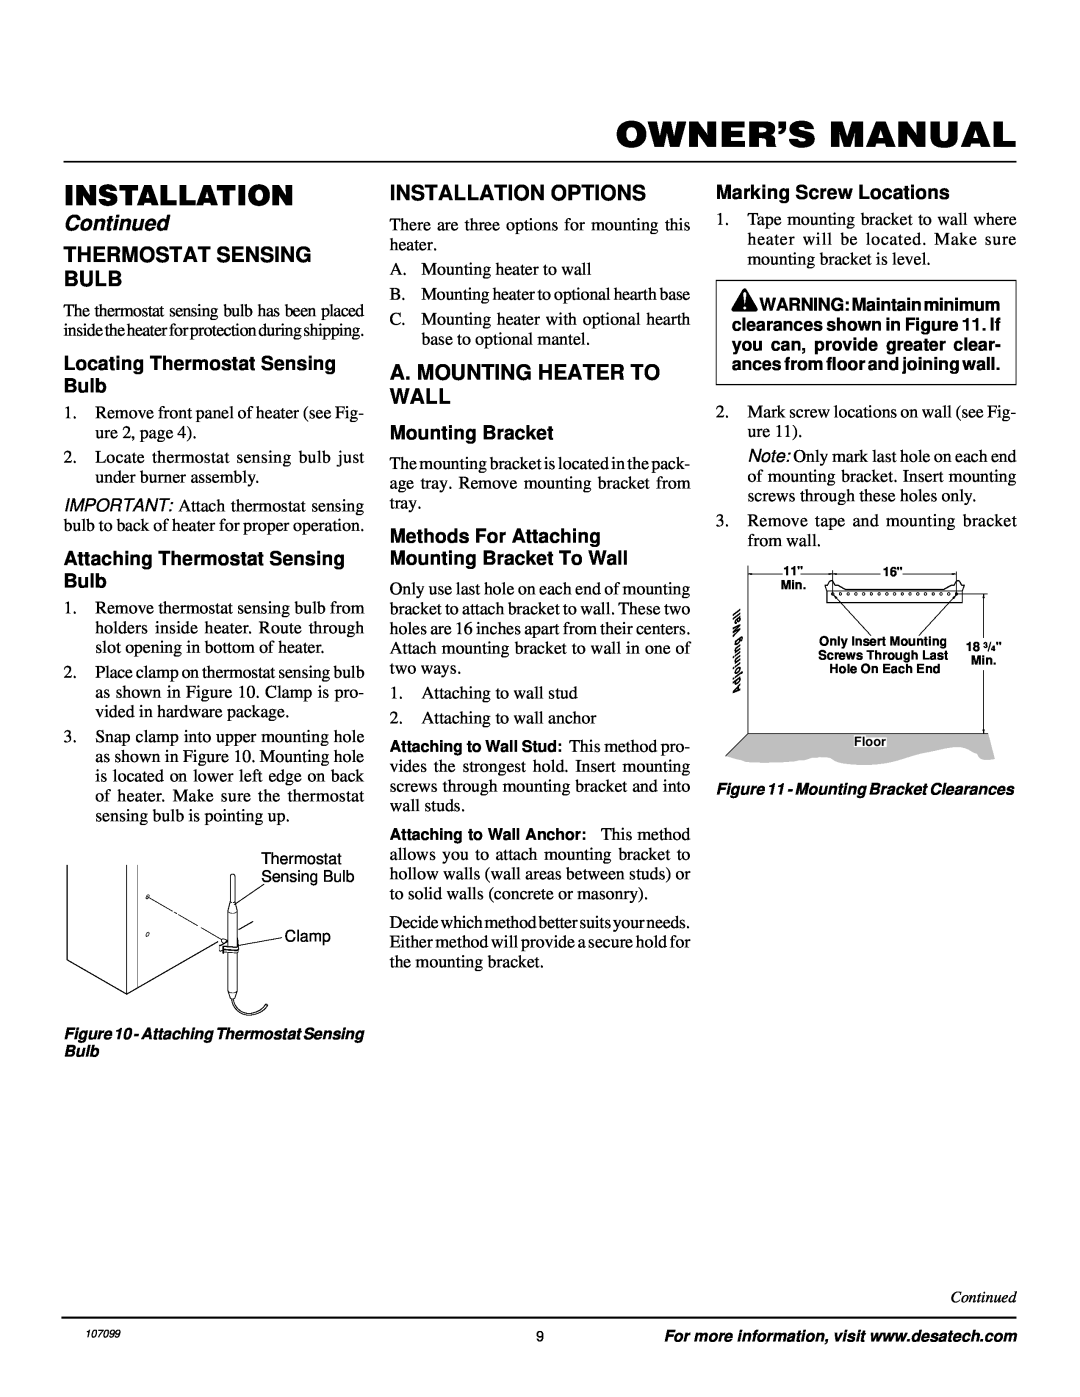 Desa RFN30TA Installation Options, A. Mounting Heater To Wall, Locating Thermostat Sensing Bulb, Mounting Bracket 